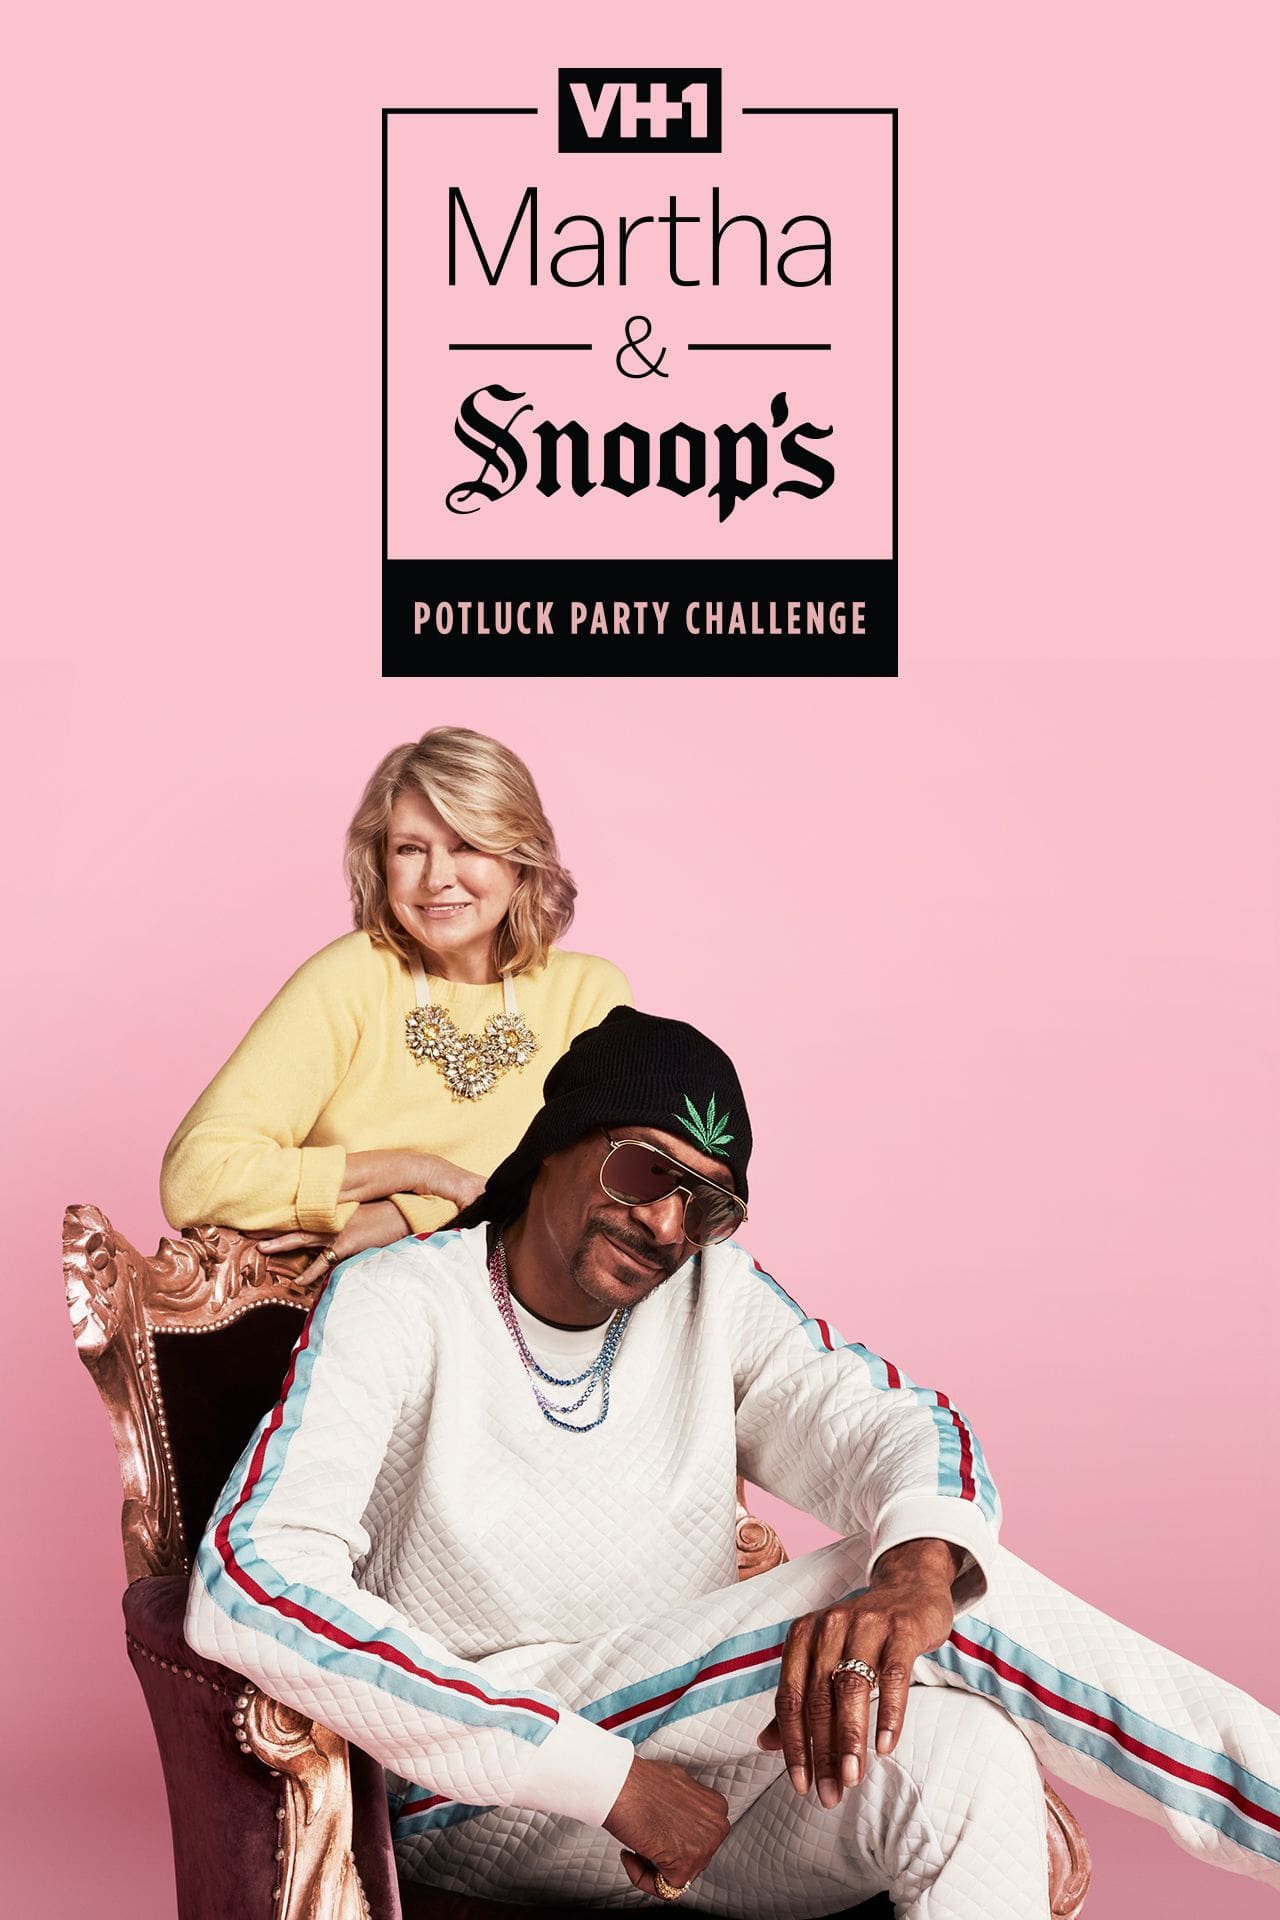 Martha & Snoop's Potluck Dinner Party (2016)